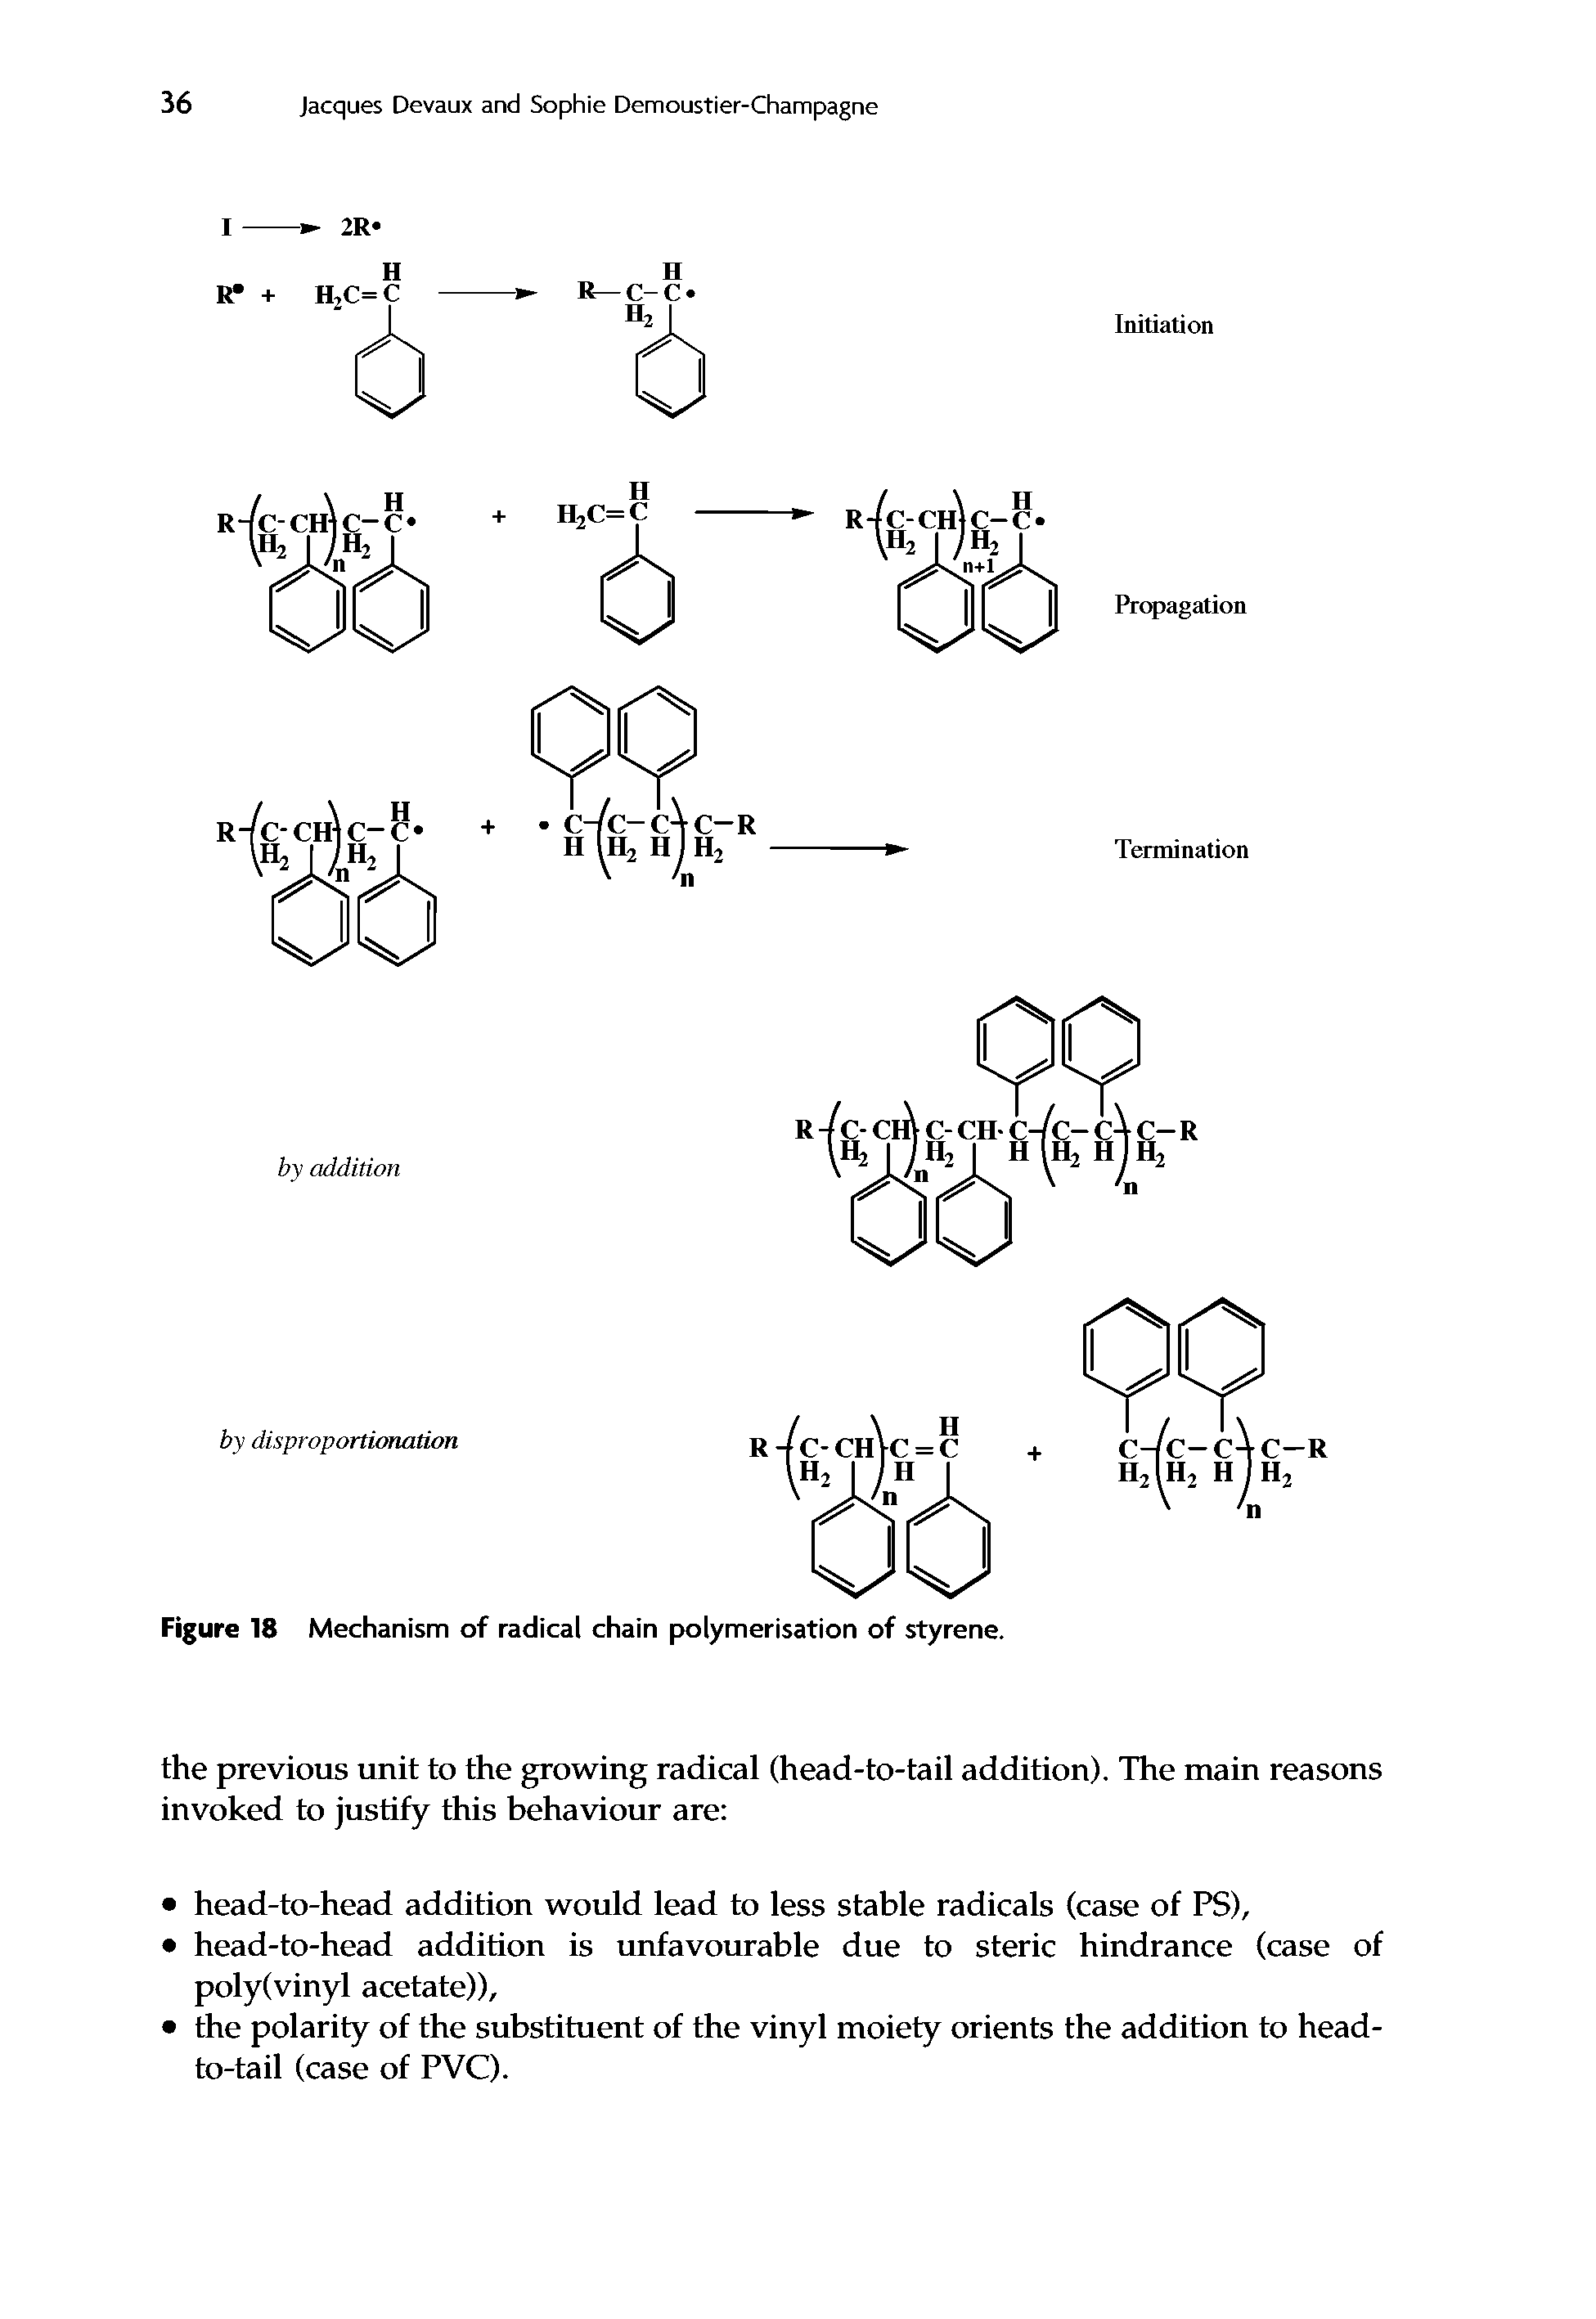 Figure 18 Mechanism of radical chain polymerisation of styrene.